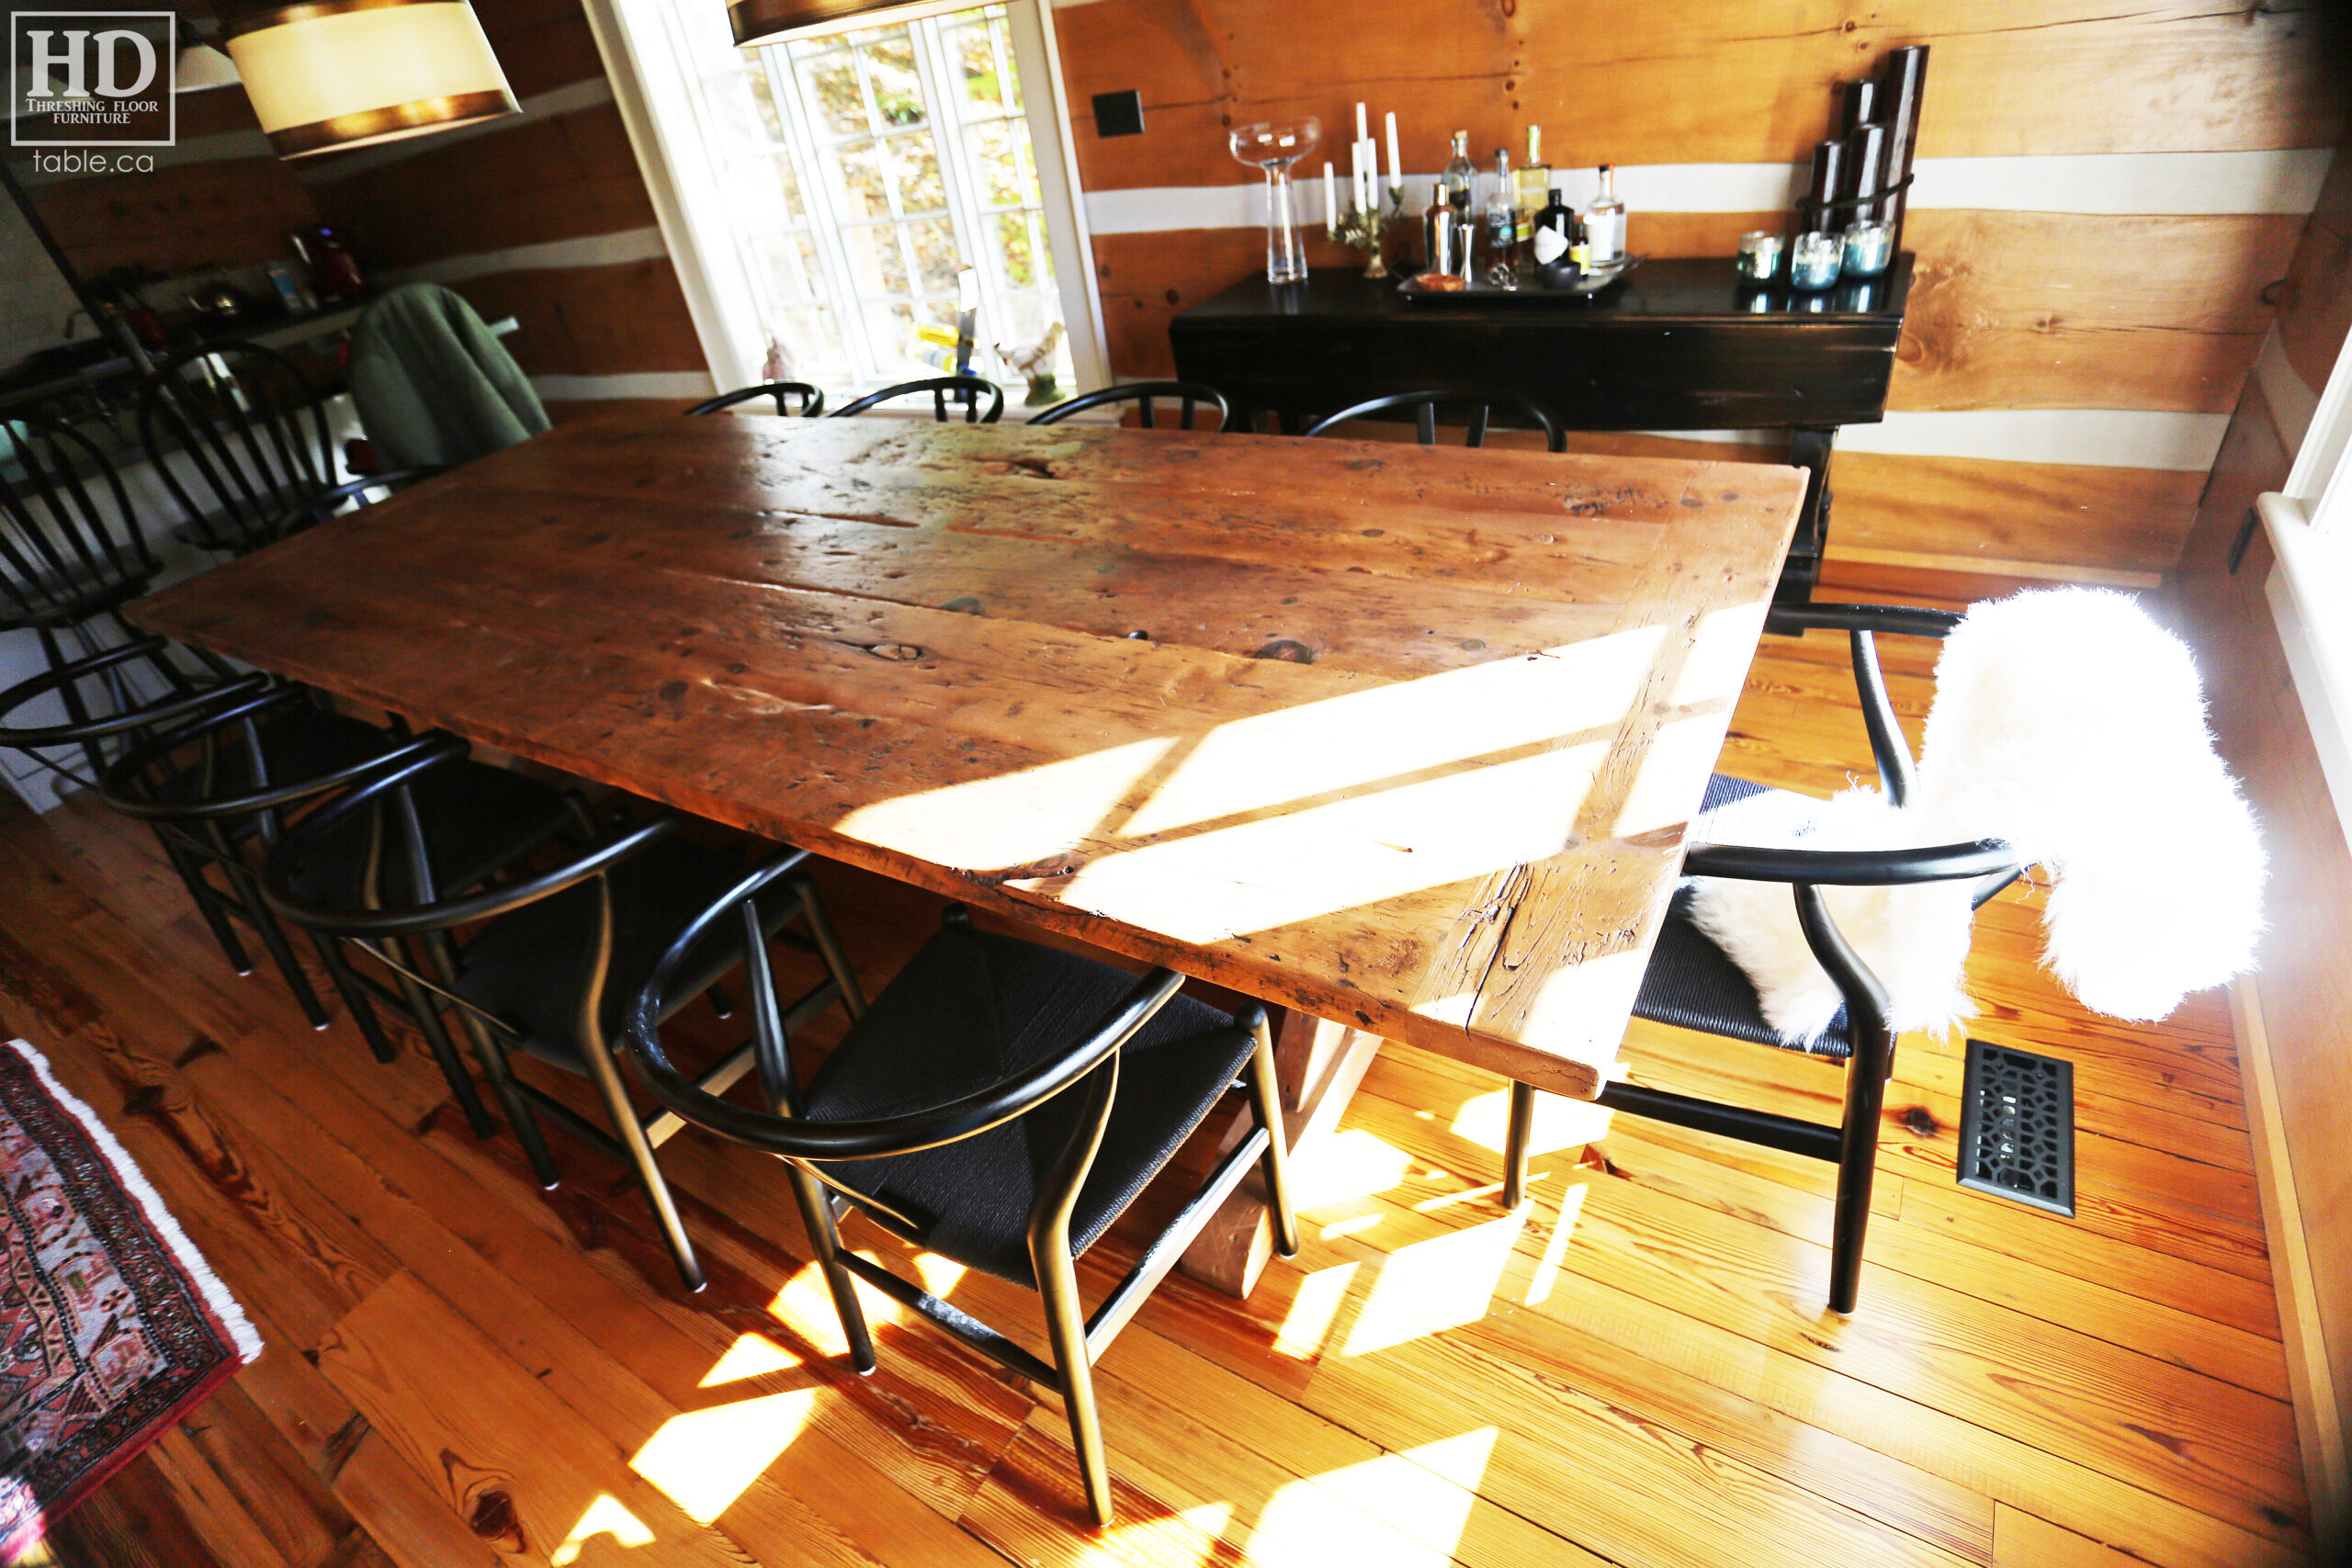 Distressed Reclaimed Wood Table by HD Threshing Floor Furniture / www.table.ca